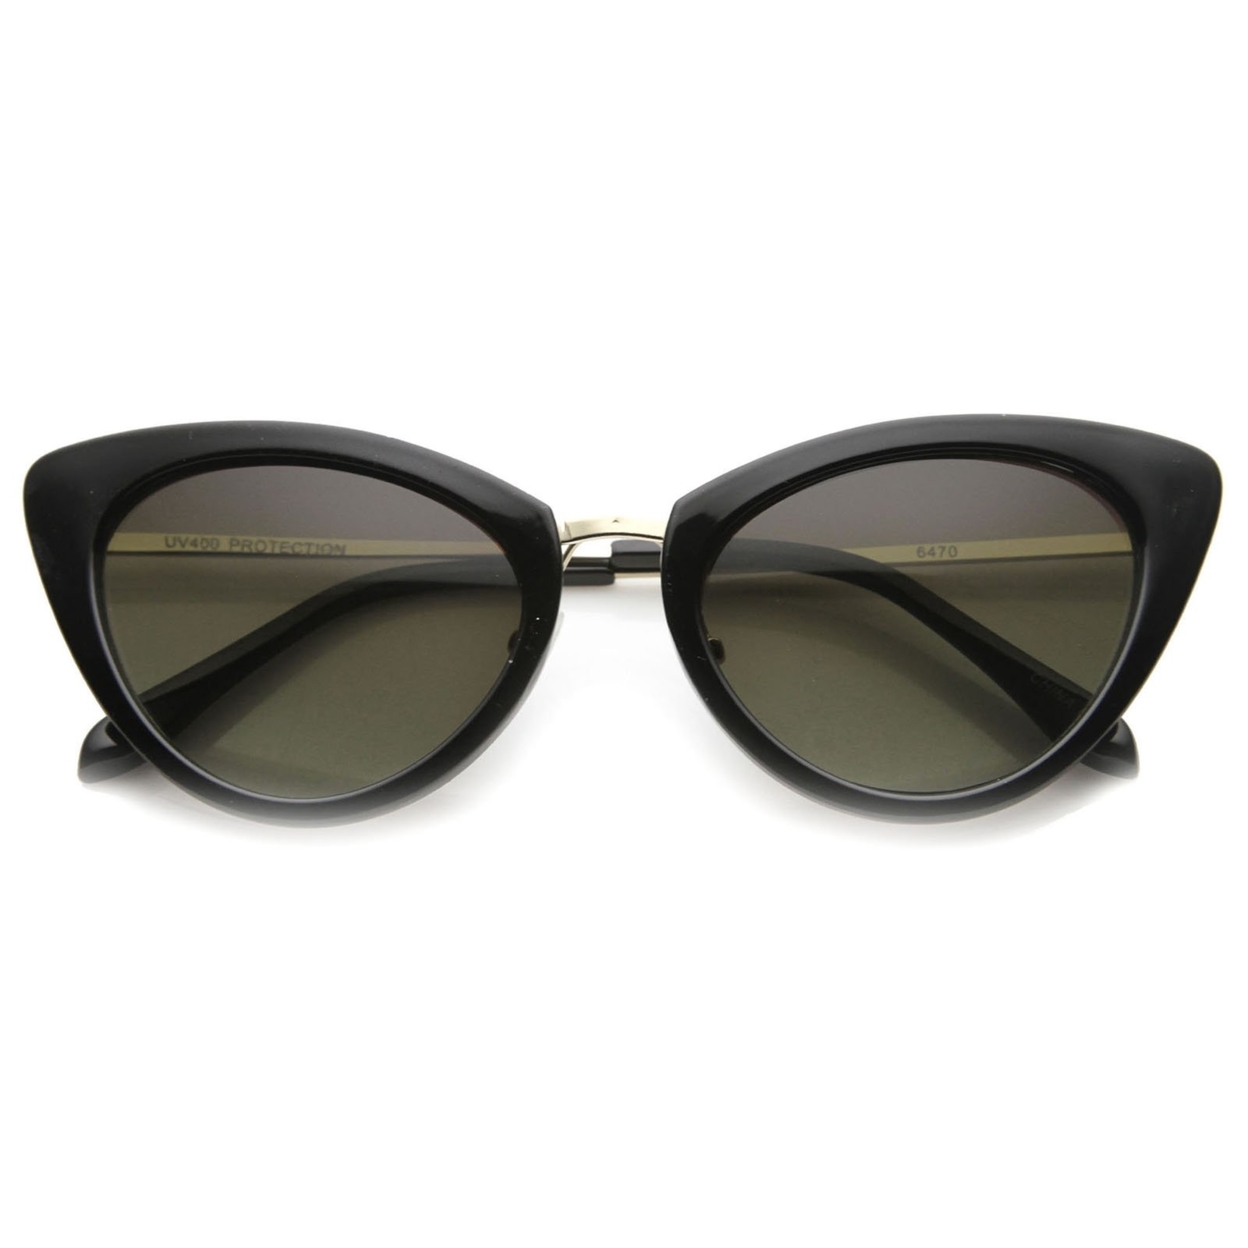 Womens Classic Oval Shape Metal Temple Mod Fashion Cat Eye Sunglasses - Black-Gold / Lavender